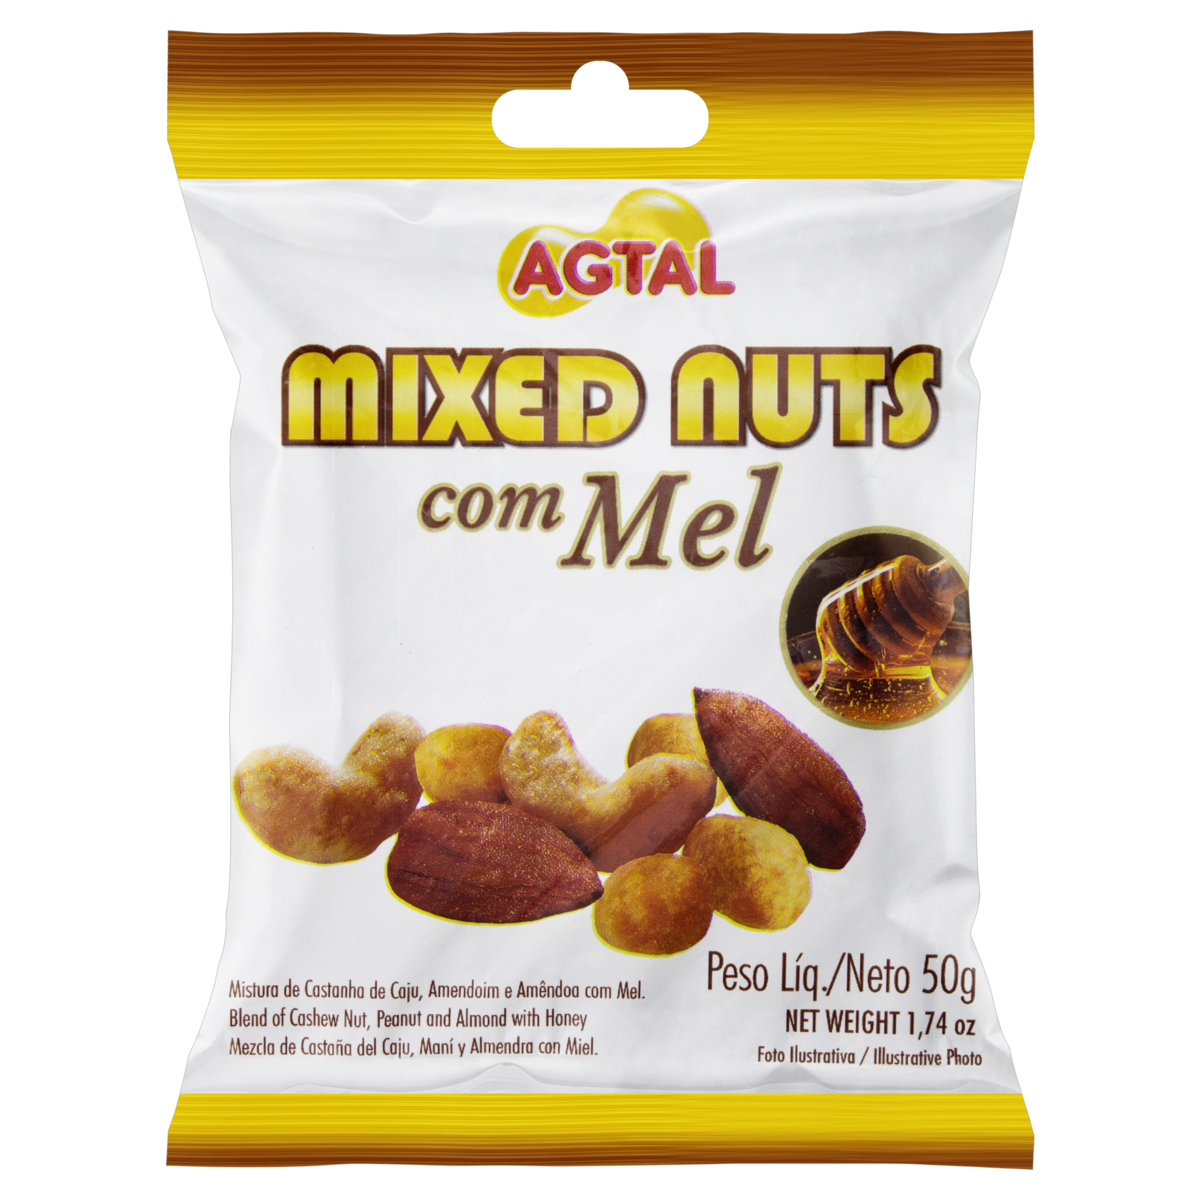 7896261402713 - MIX DE CASTANHA COM MEL AGTAL MIXED NUTS PACOTE 50G